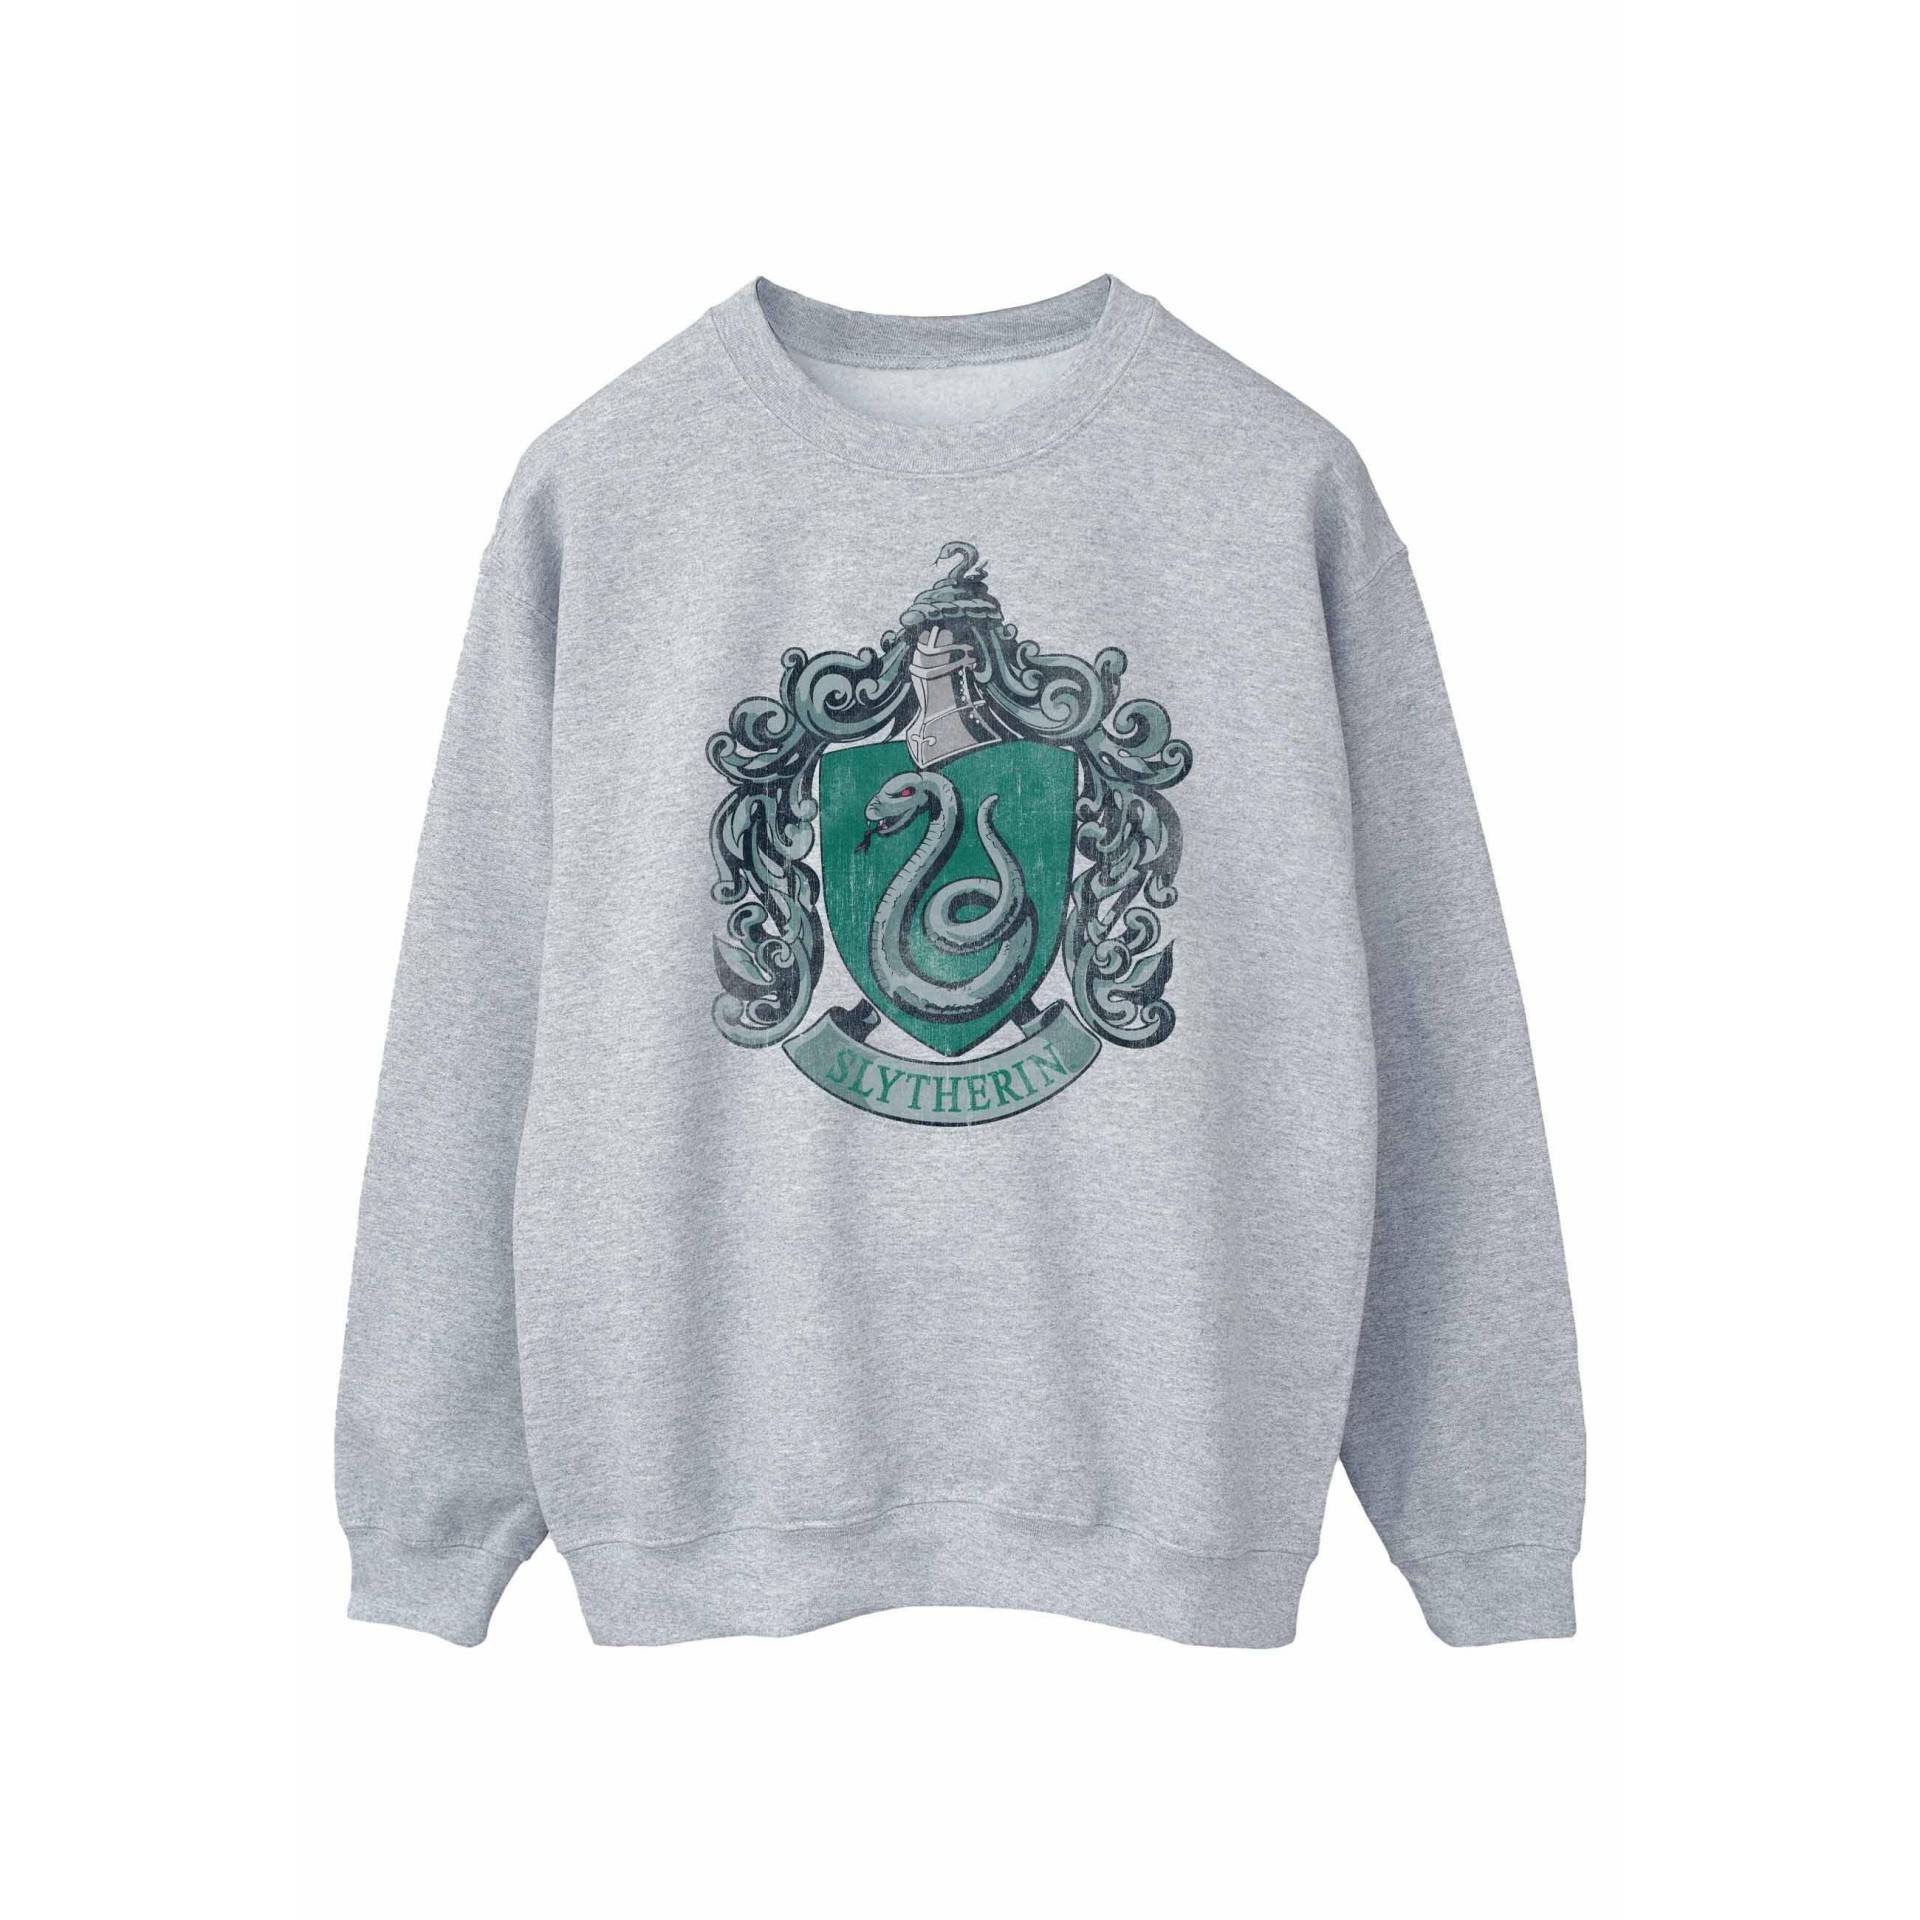 Sweatshirt Herren Grau S von Harry Potter